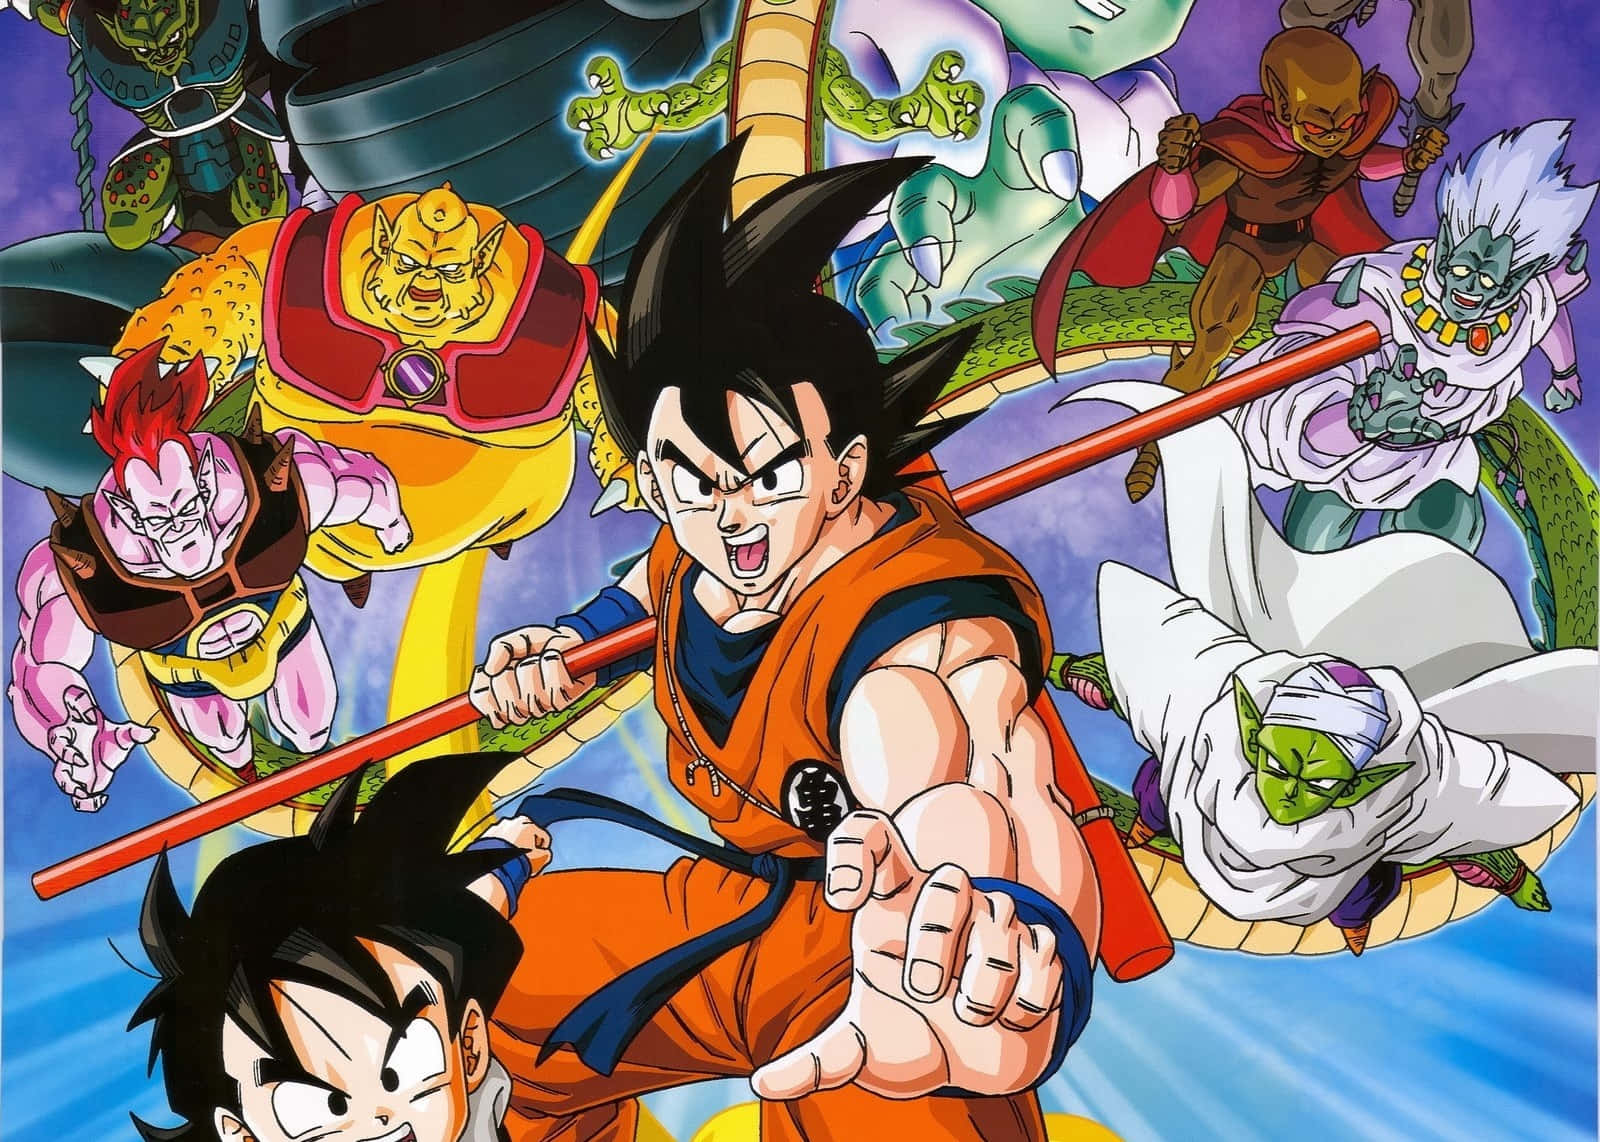 Feel the power of Super Saiyan Goku in the electrifying 'Dragon Ball' movie!" Wallpaper